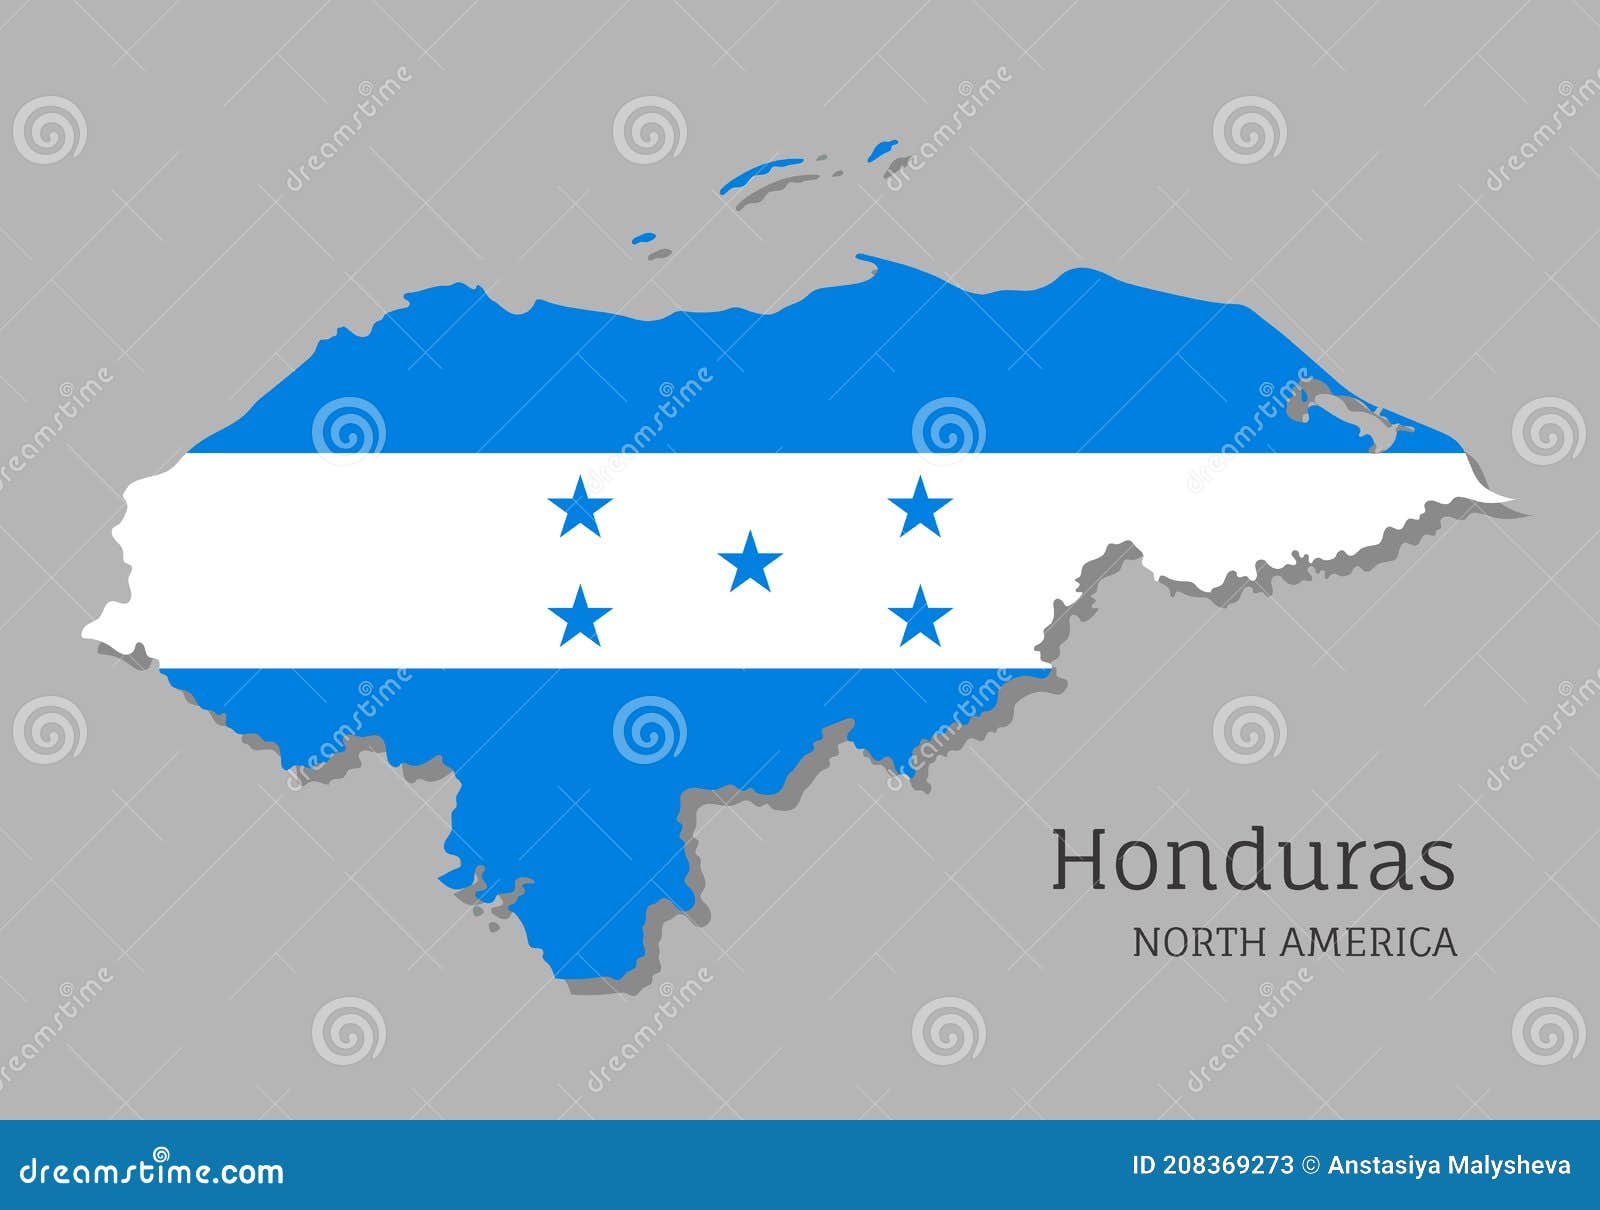 Столица гондураса на карте. Гондурас на карте. Географическое положение Гондураса. Карта Гондураса географическая.